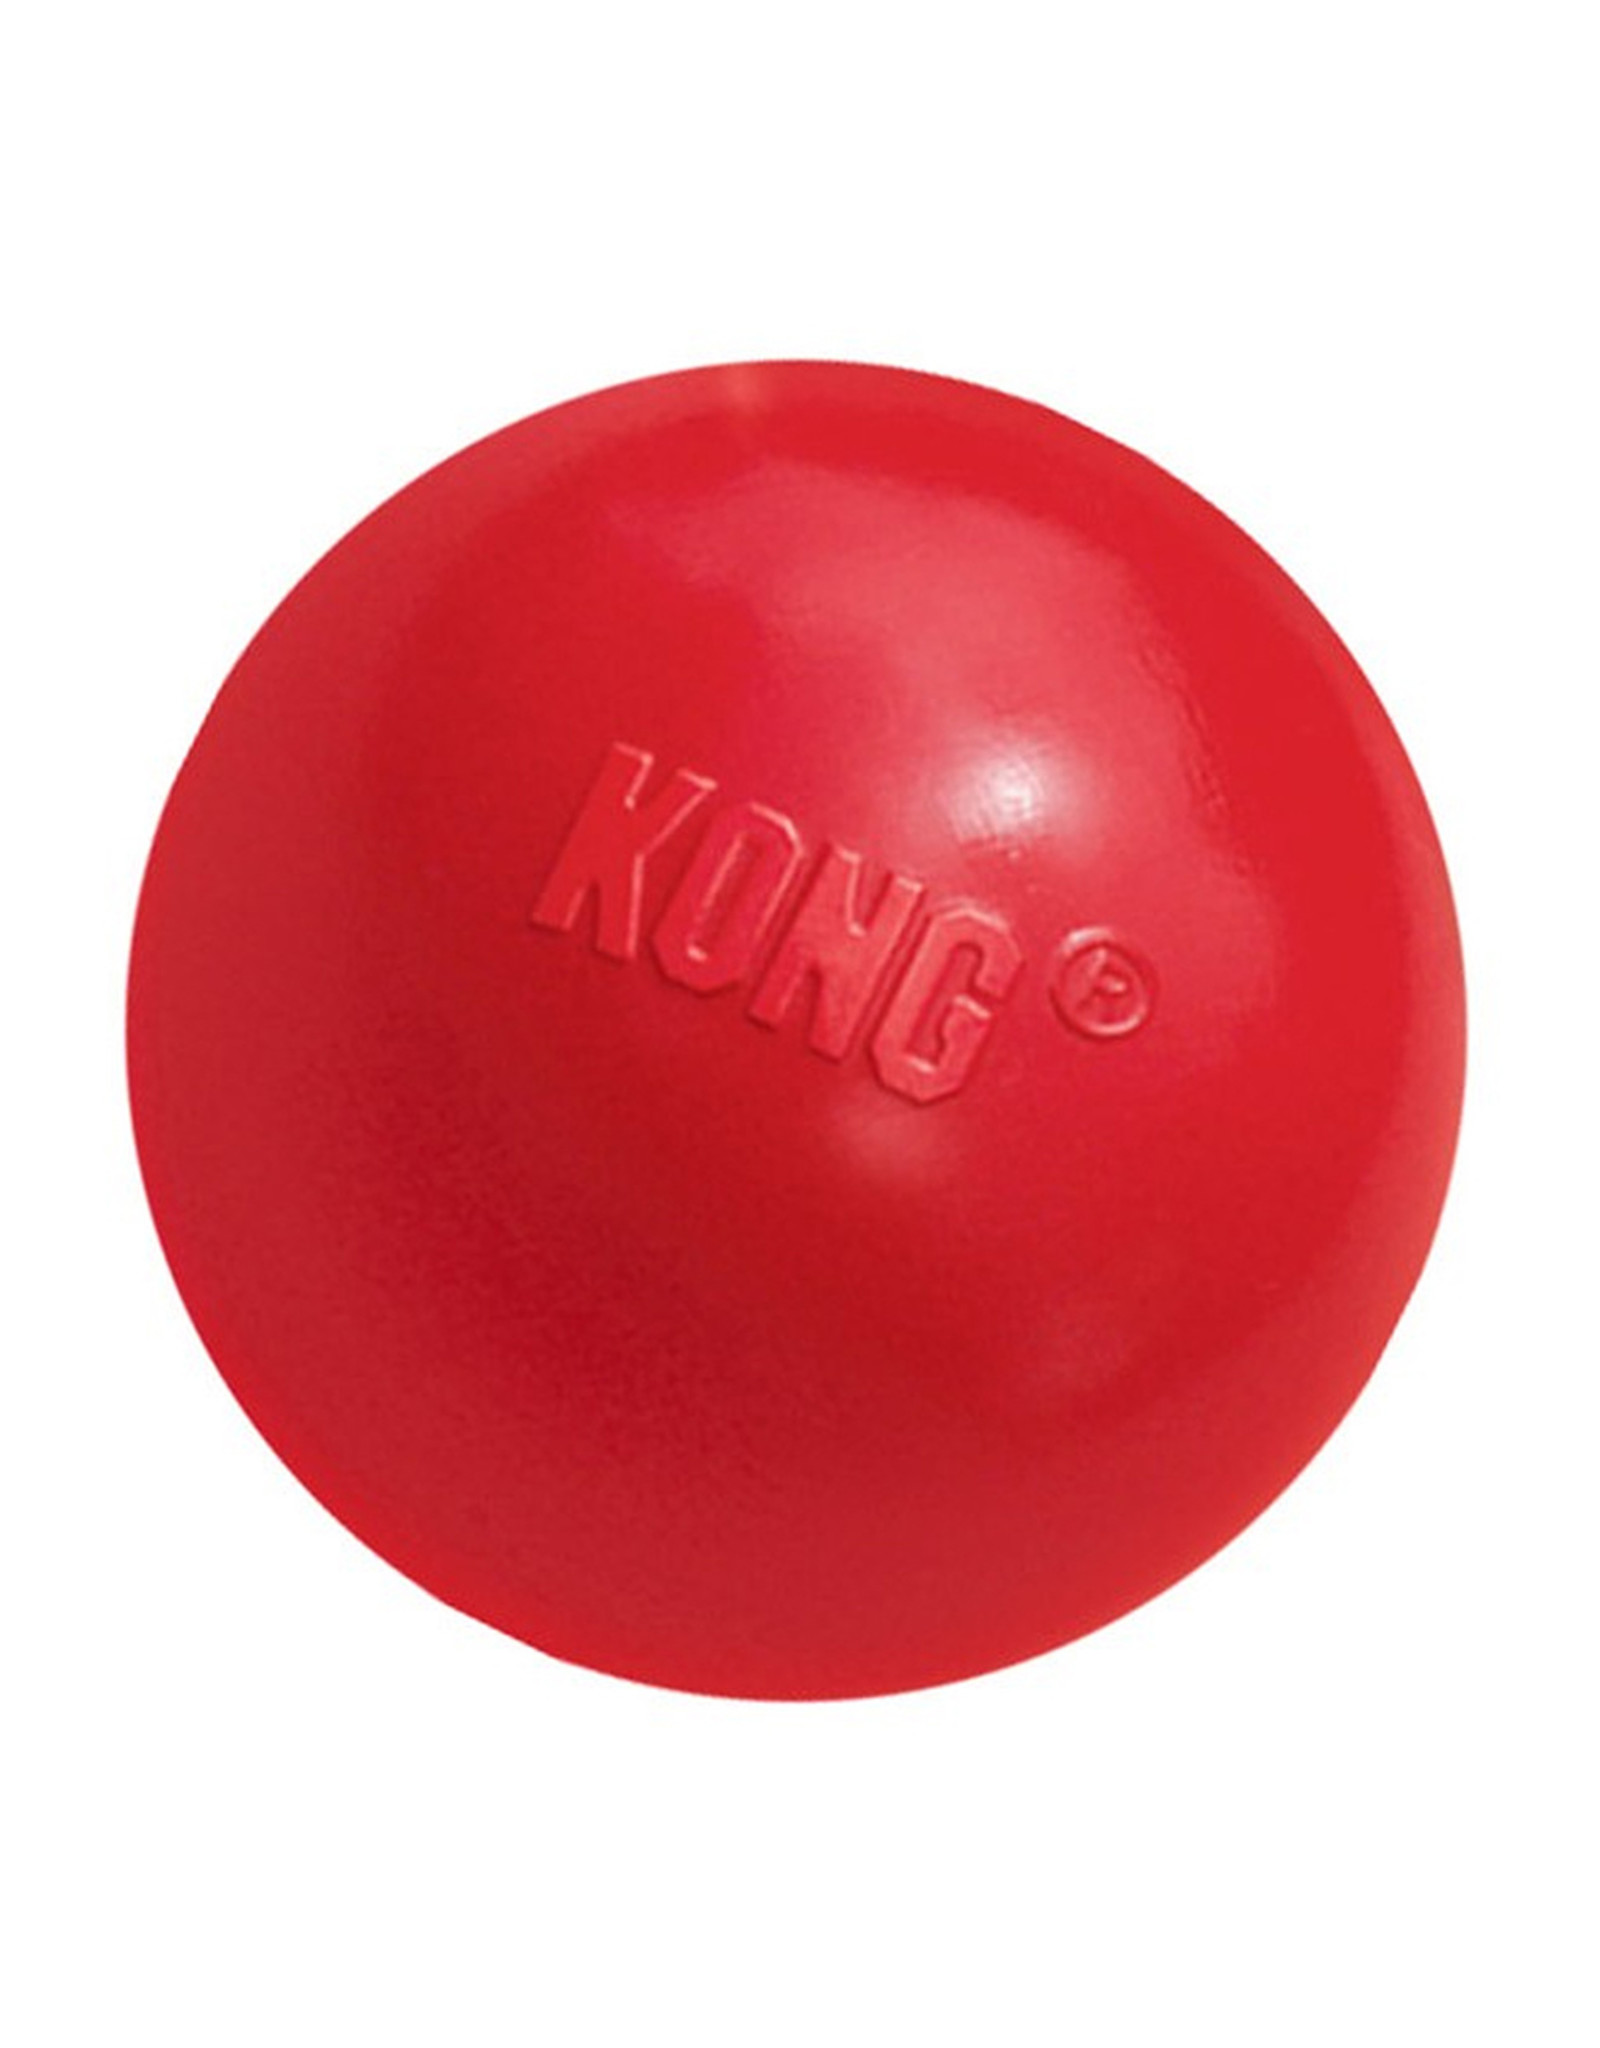 Kong Ball - Red